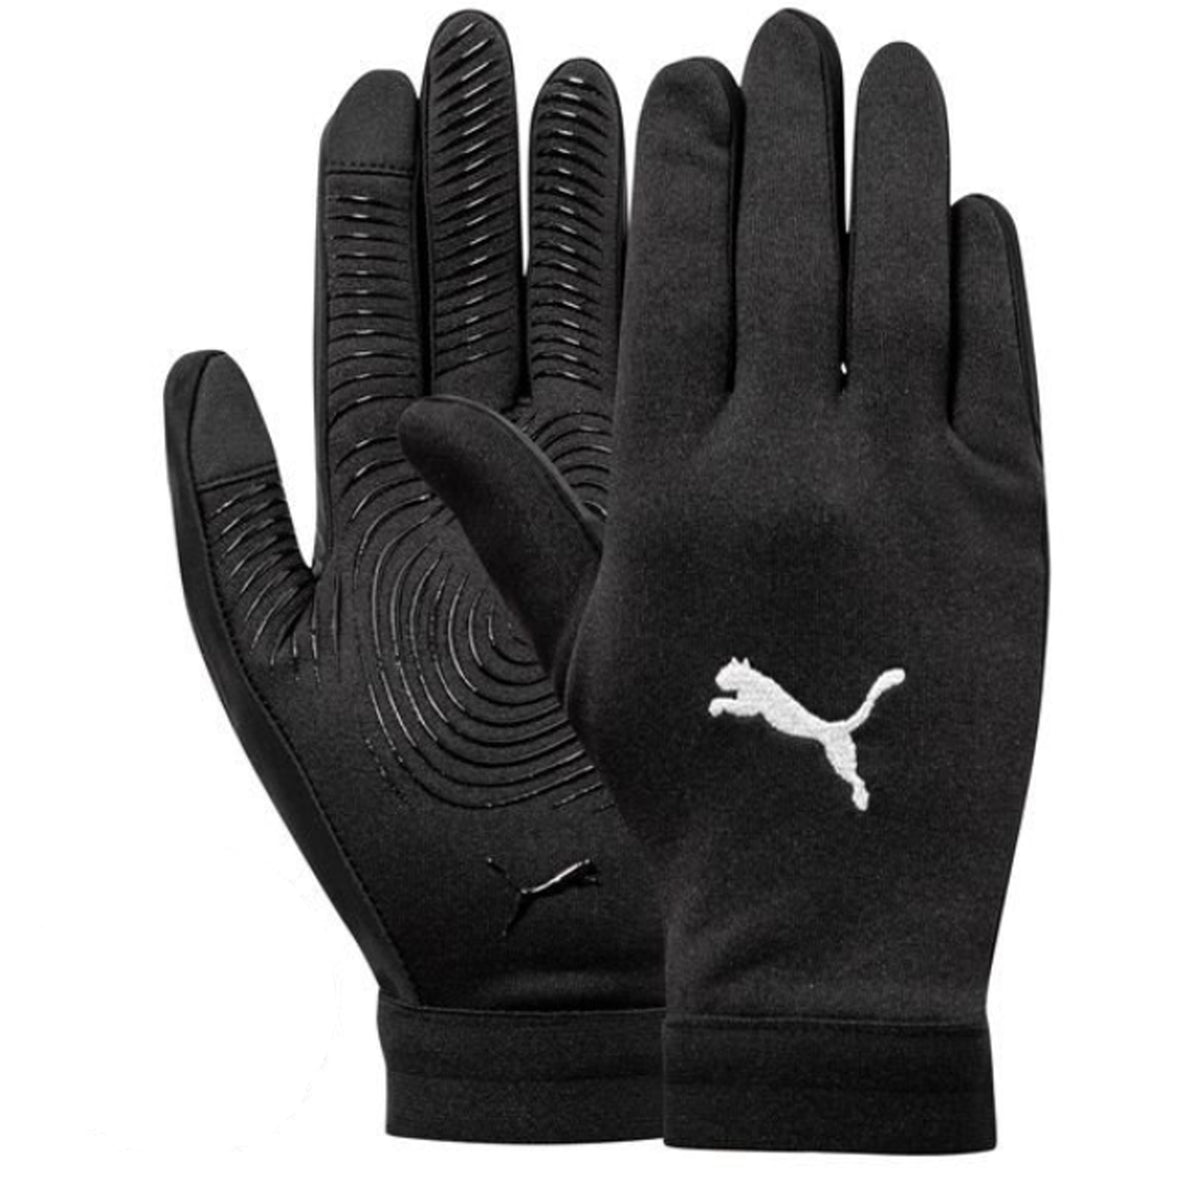 Puma Winterized Players Glove Black